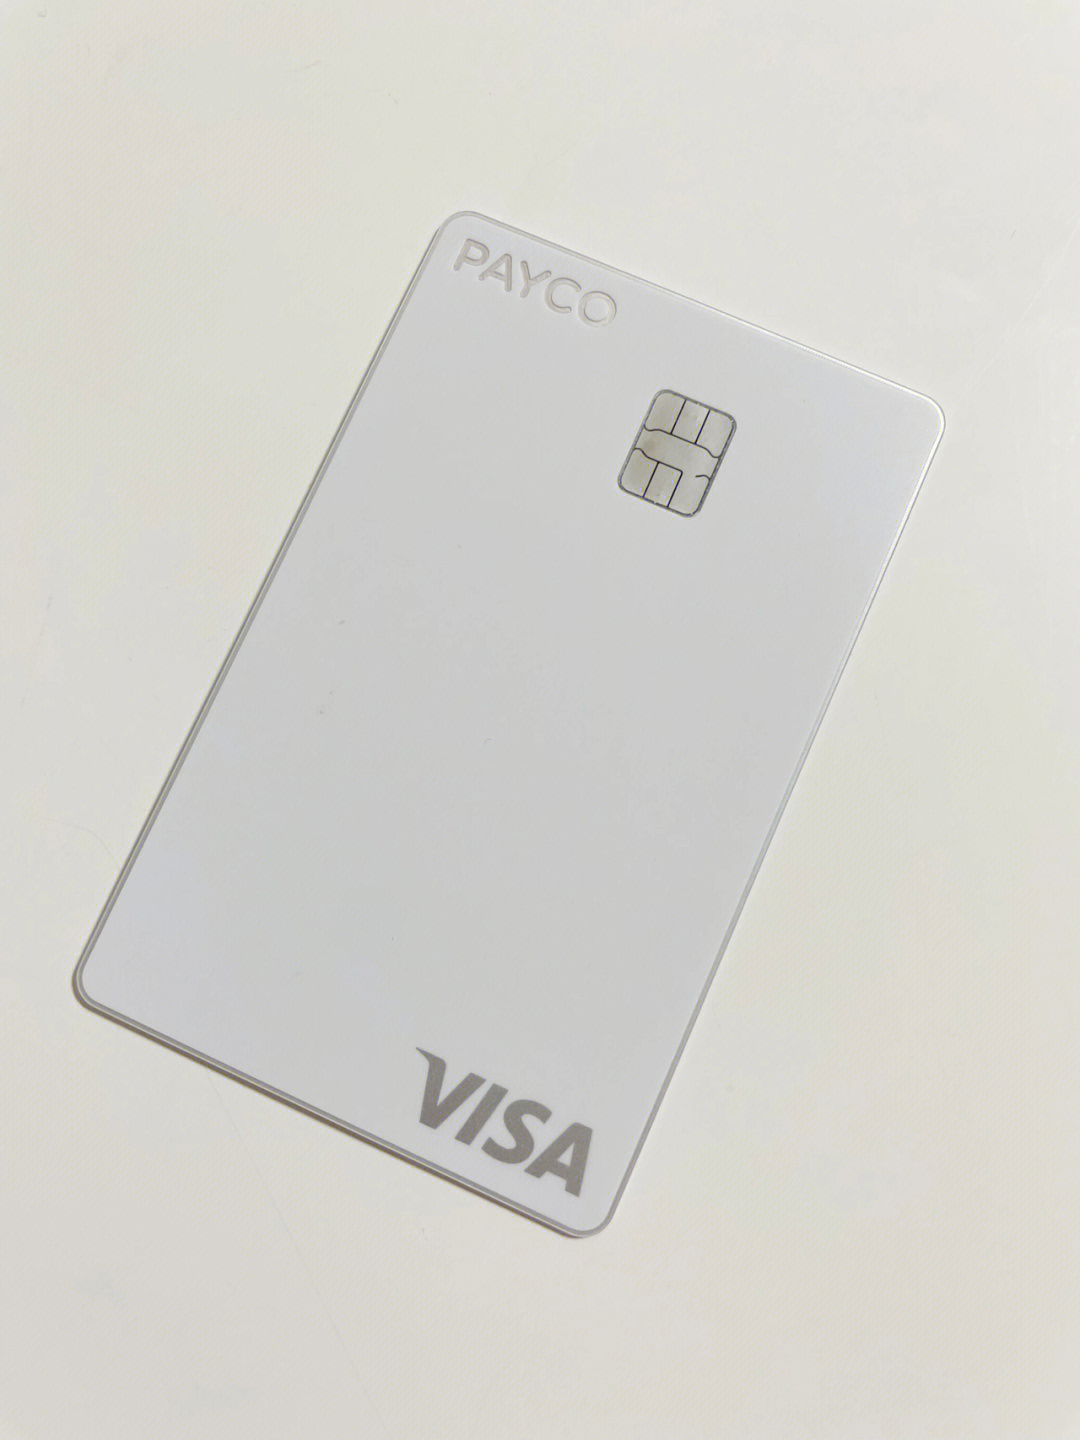 visa信用卡图片正反图片